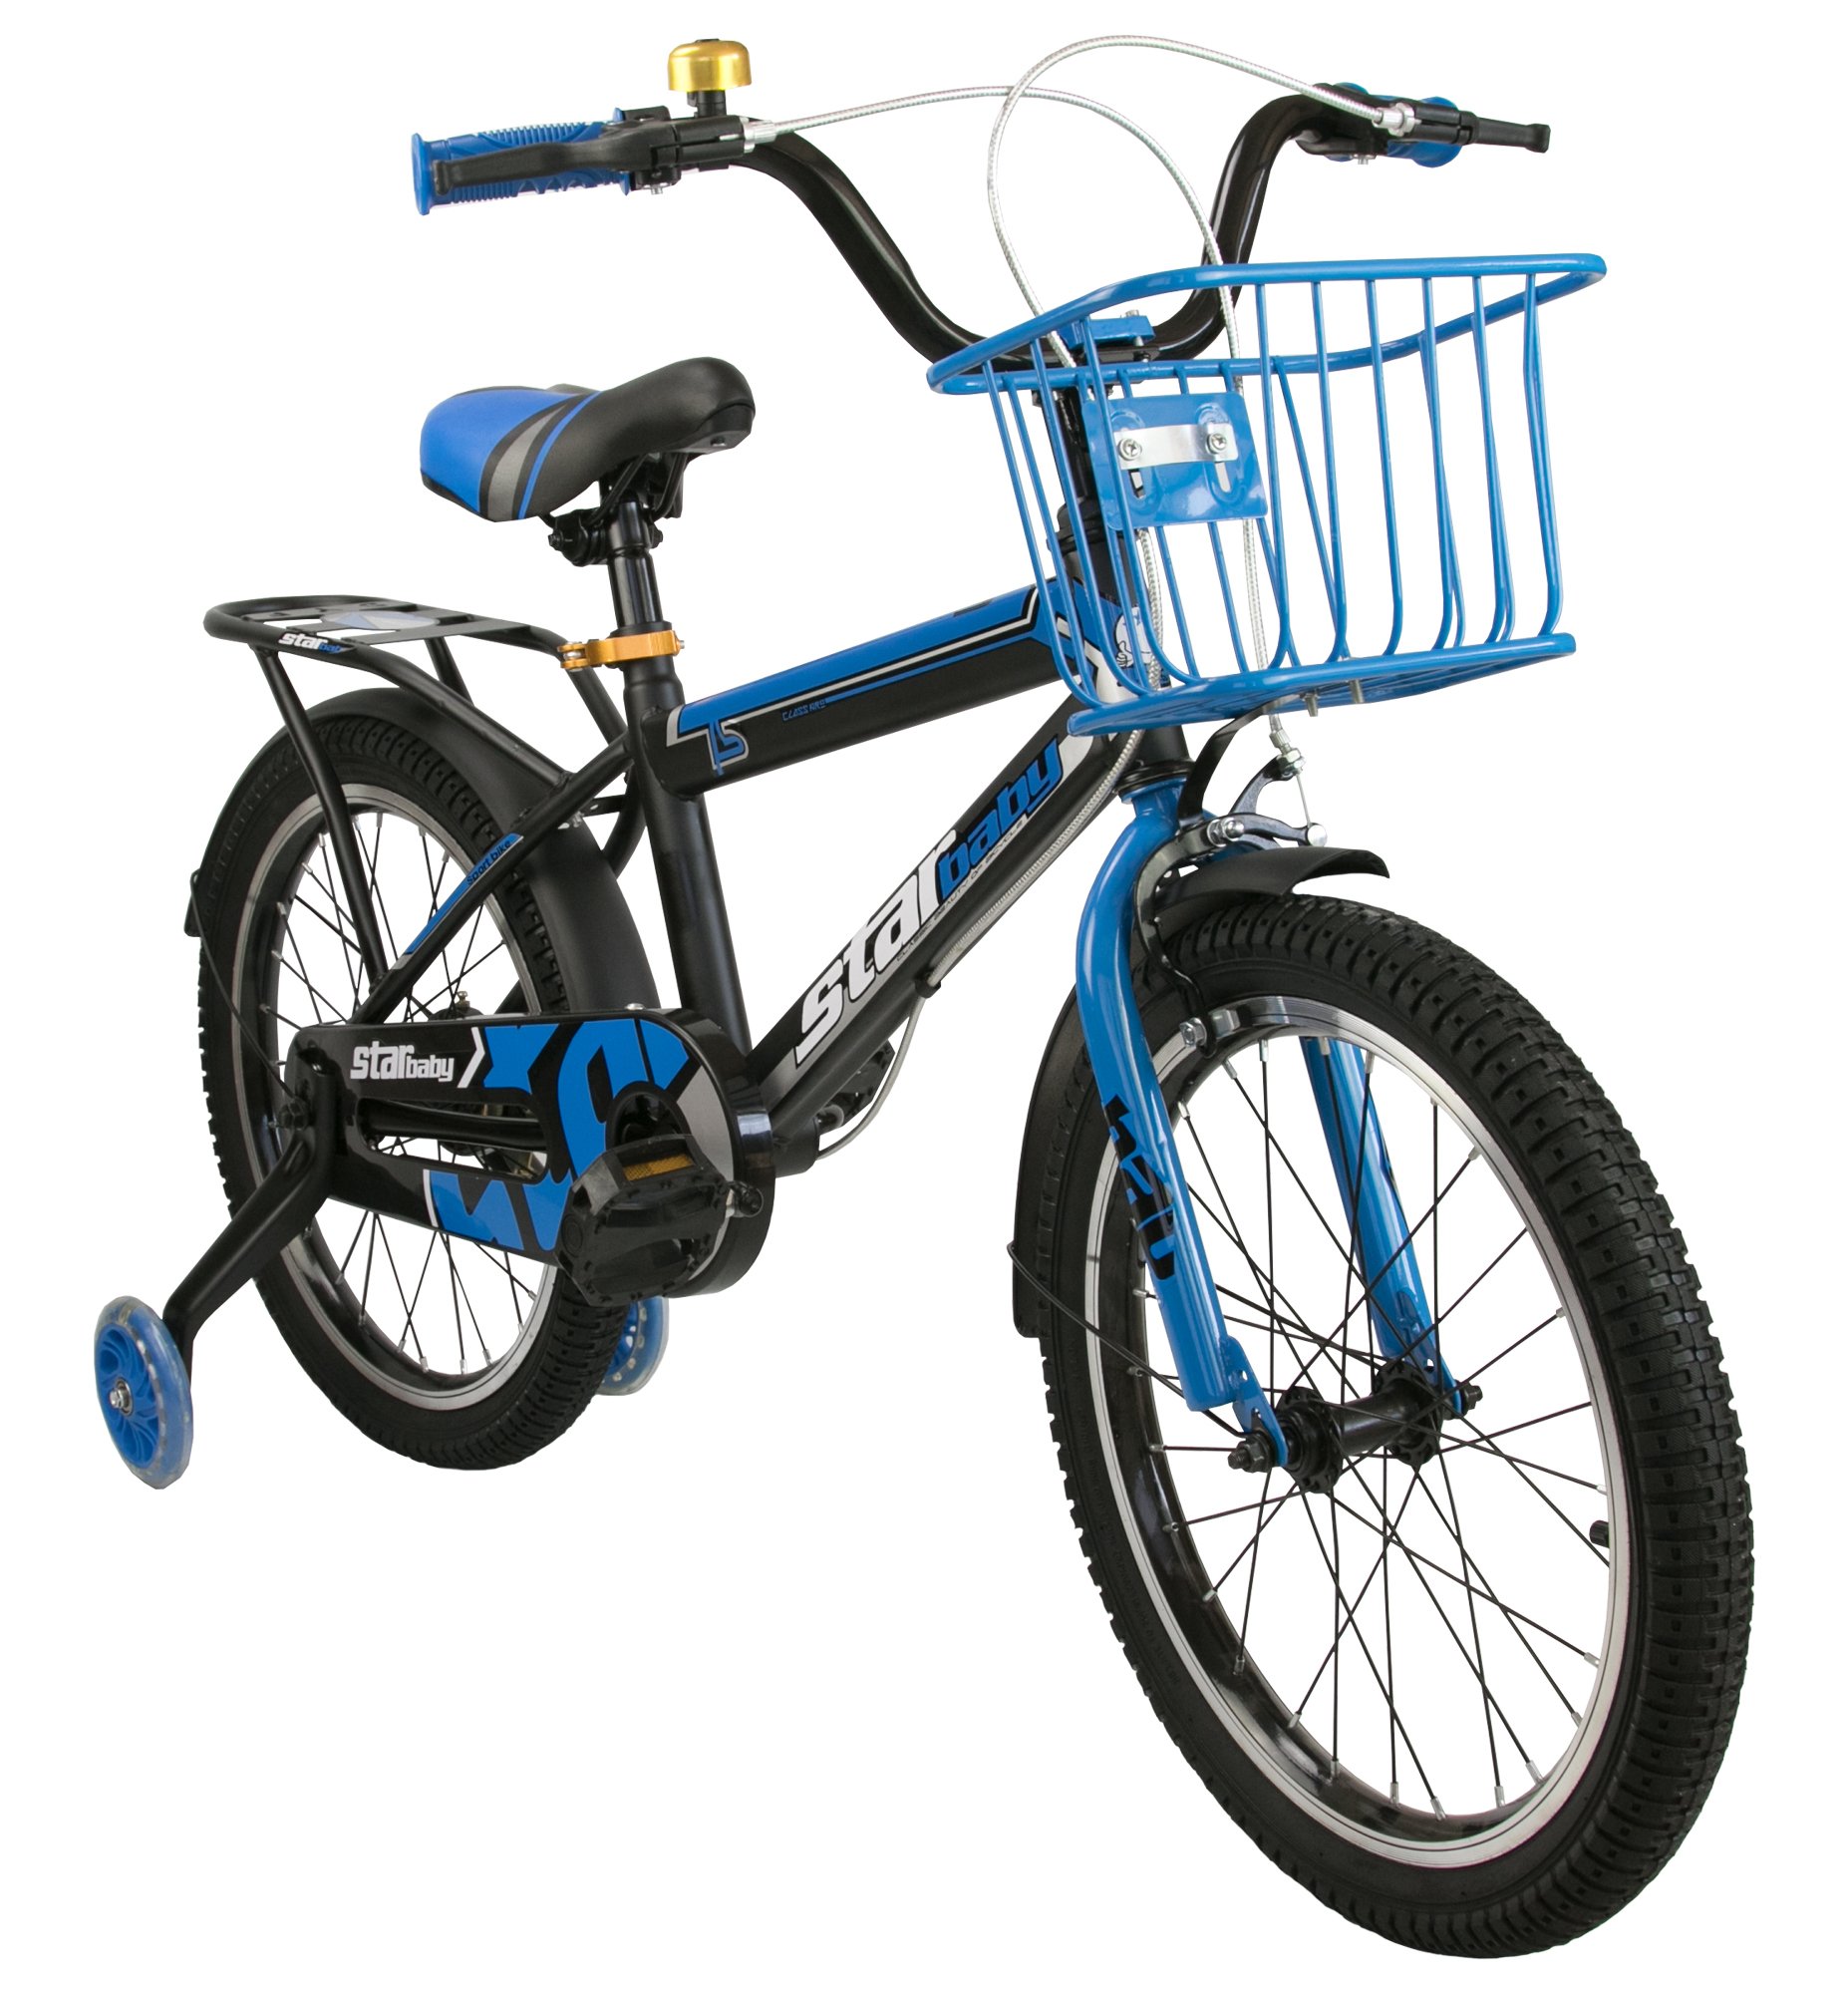 Bicicleta de niño MONTANA 514 (3-6 años) - BICICLETAS RIOJA SPORT